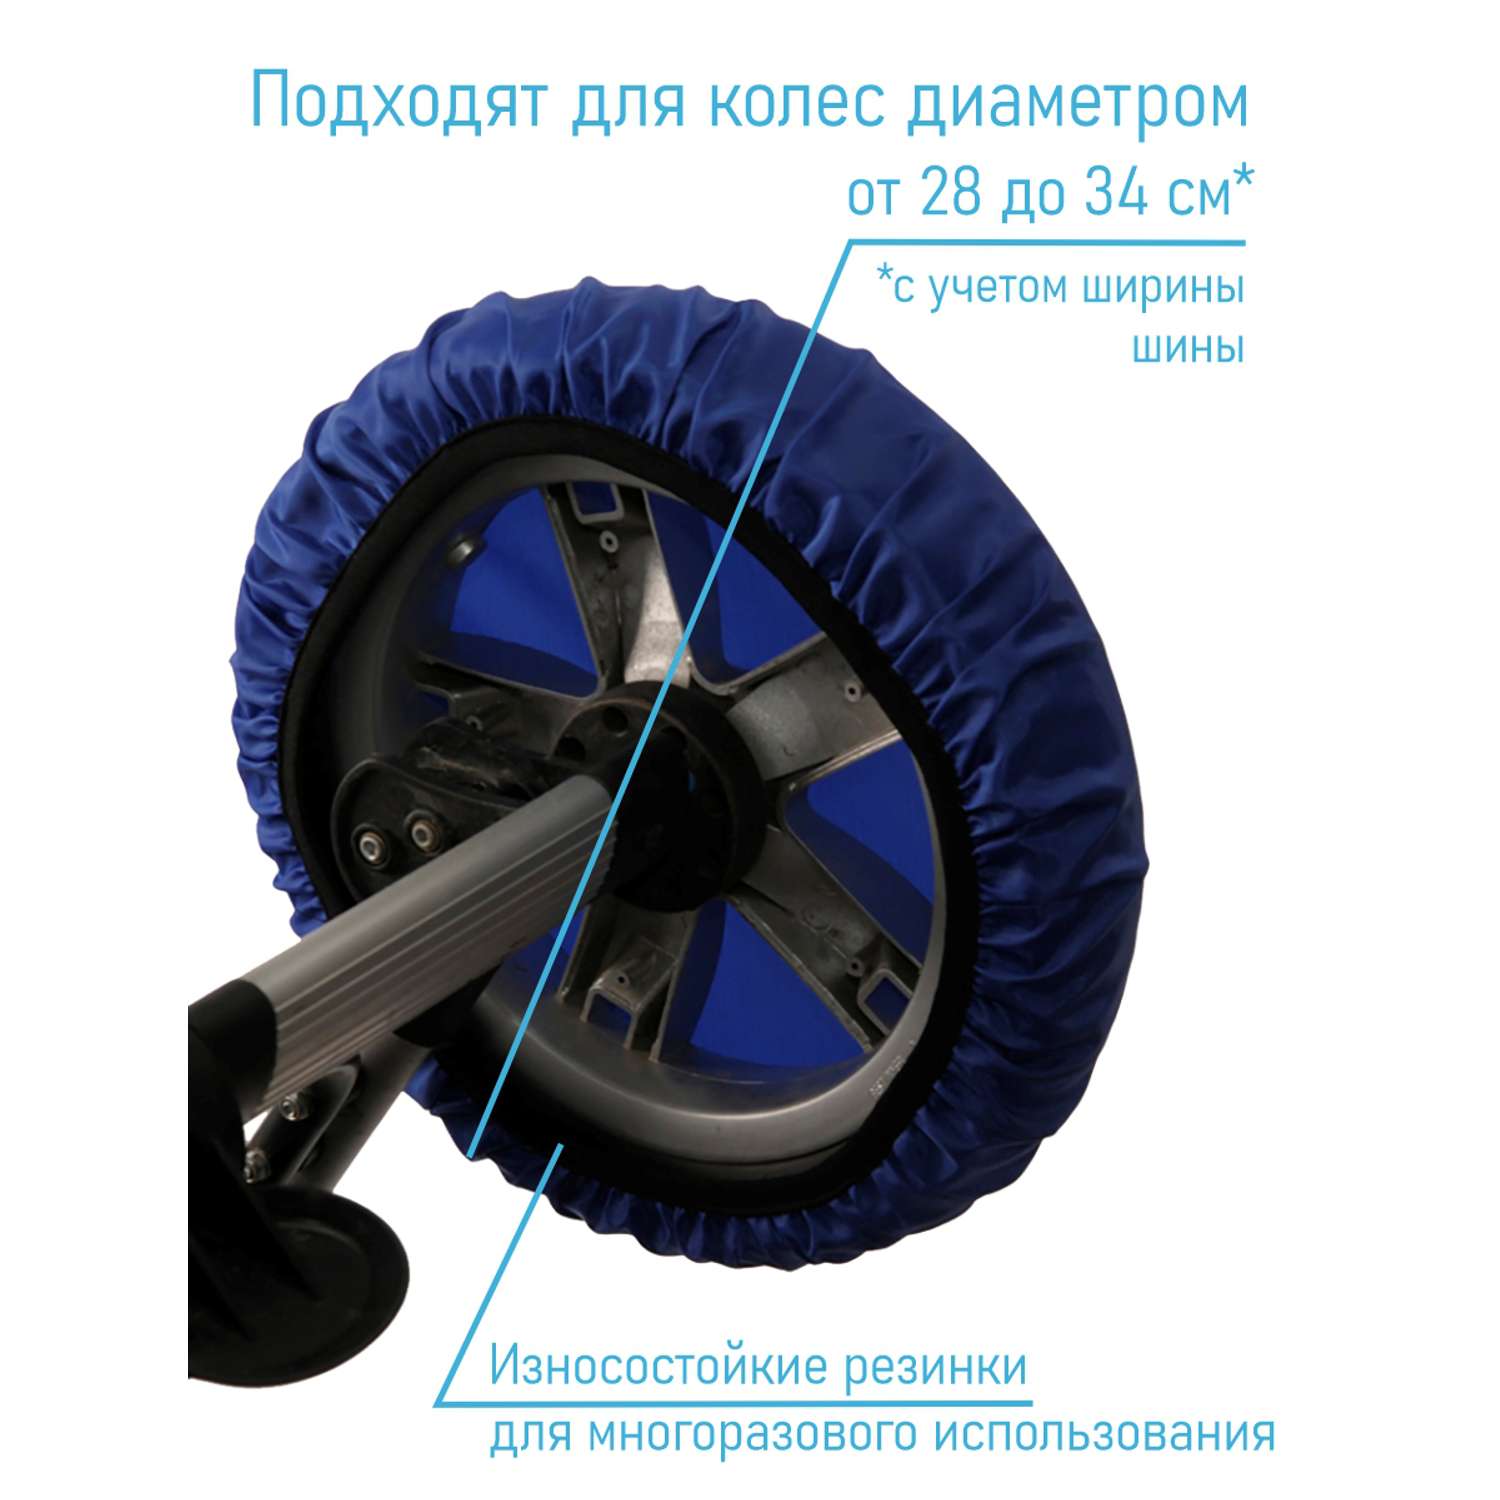 Чехлы на колеса Чудо-чадо для коляски 2 шт темно-синие / d = 28-34 см CHK04-002 - фото 2